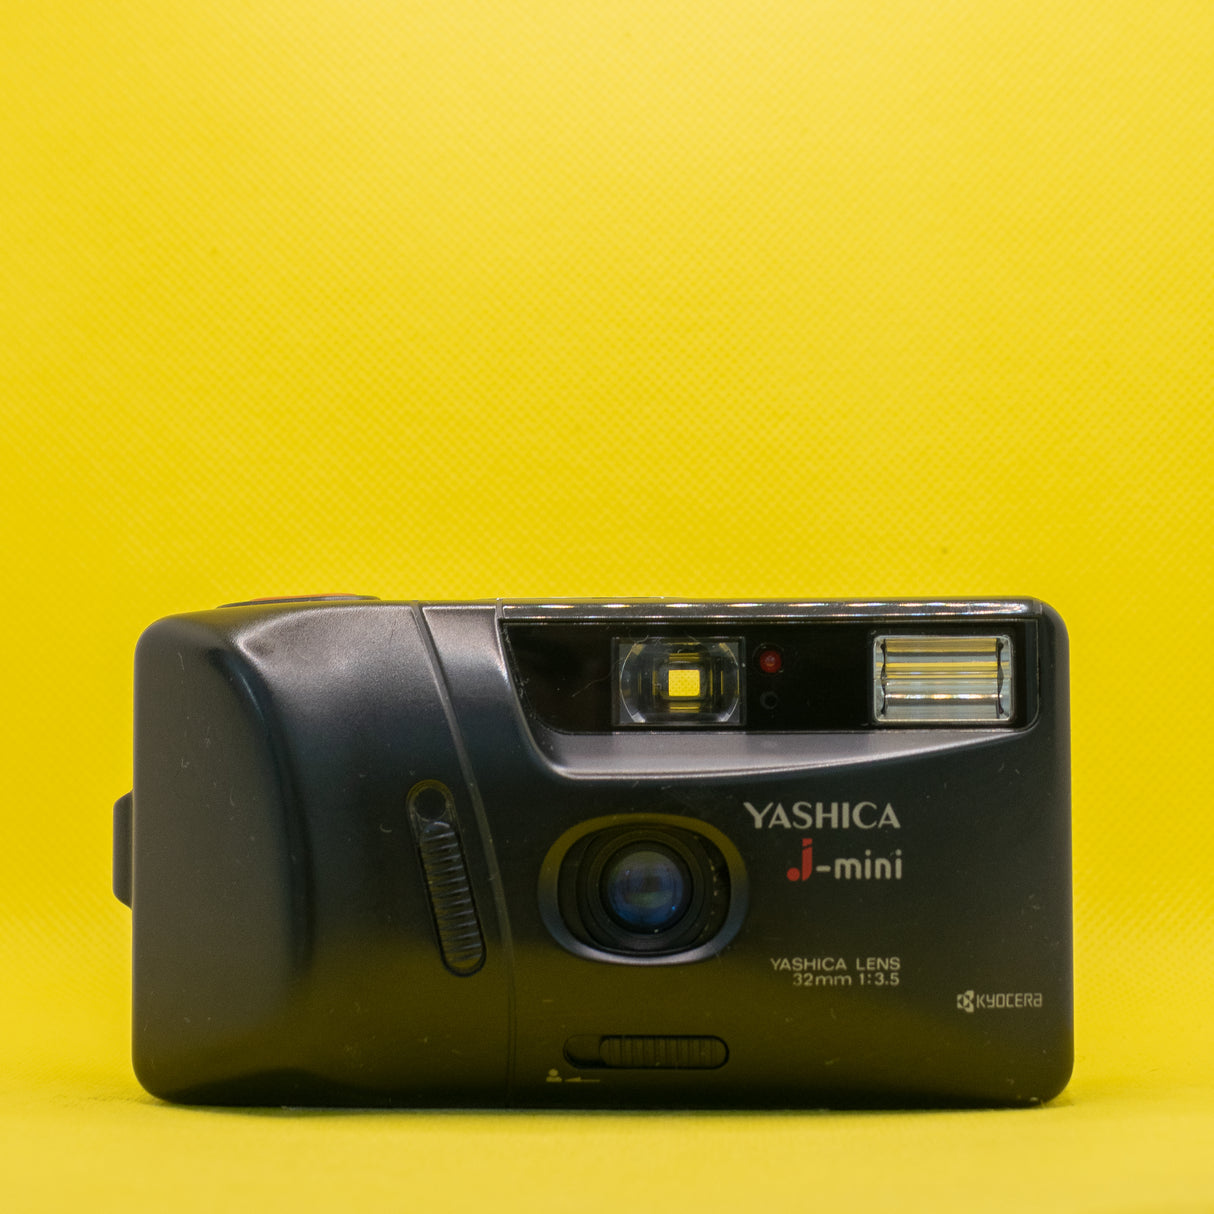 Yashica J Mini F3.5 - 35mm Compact Film Camera